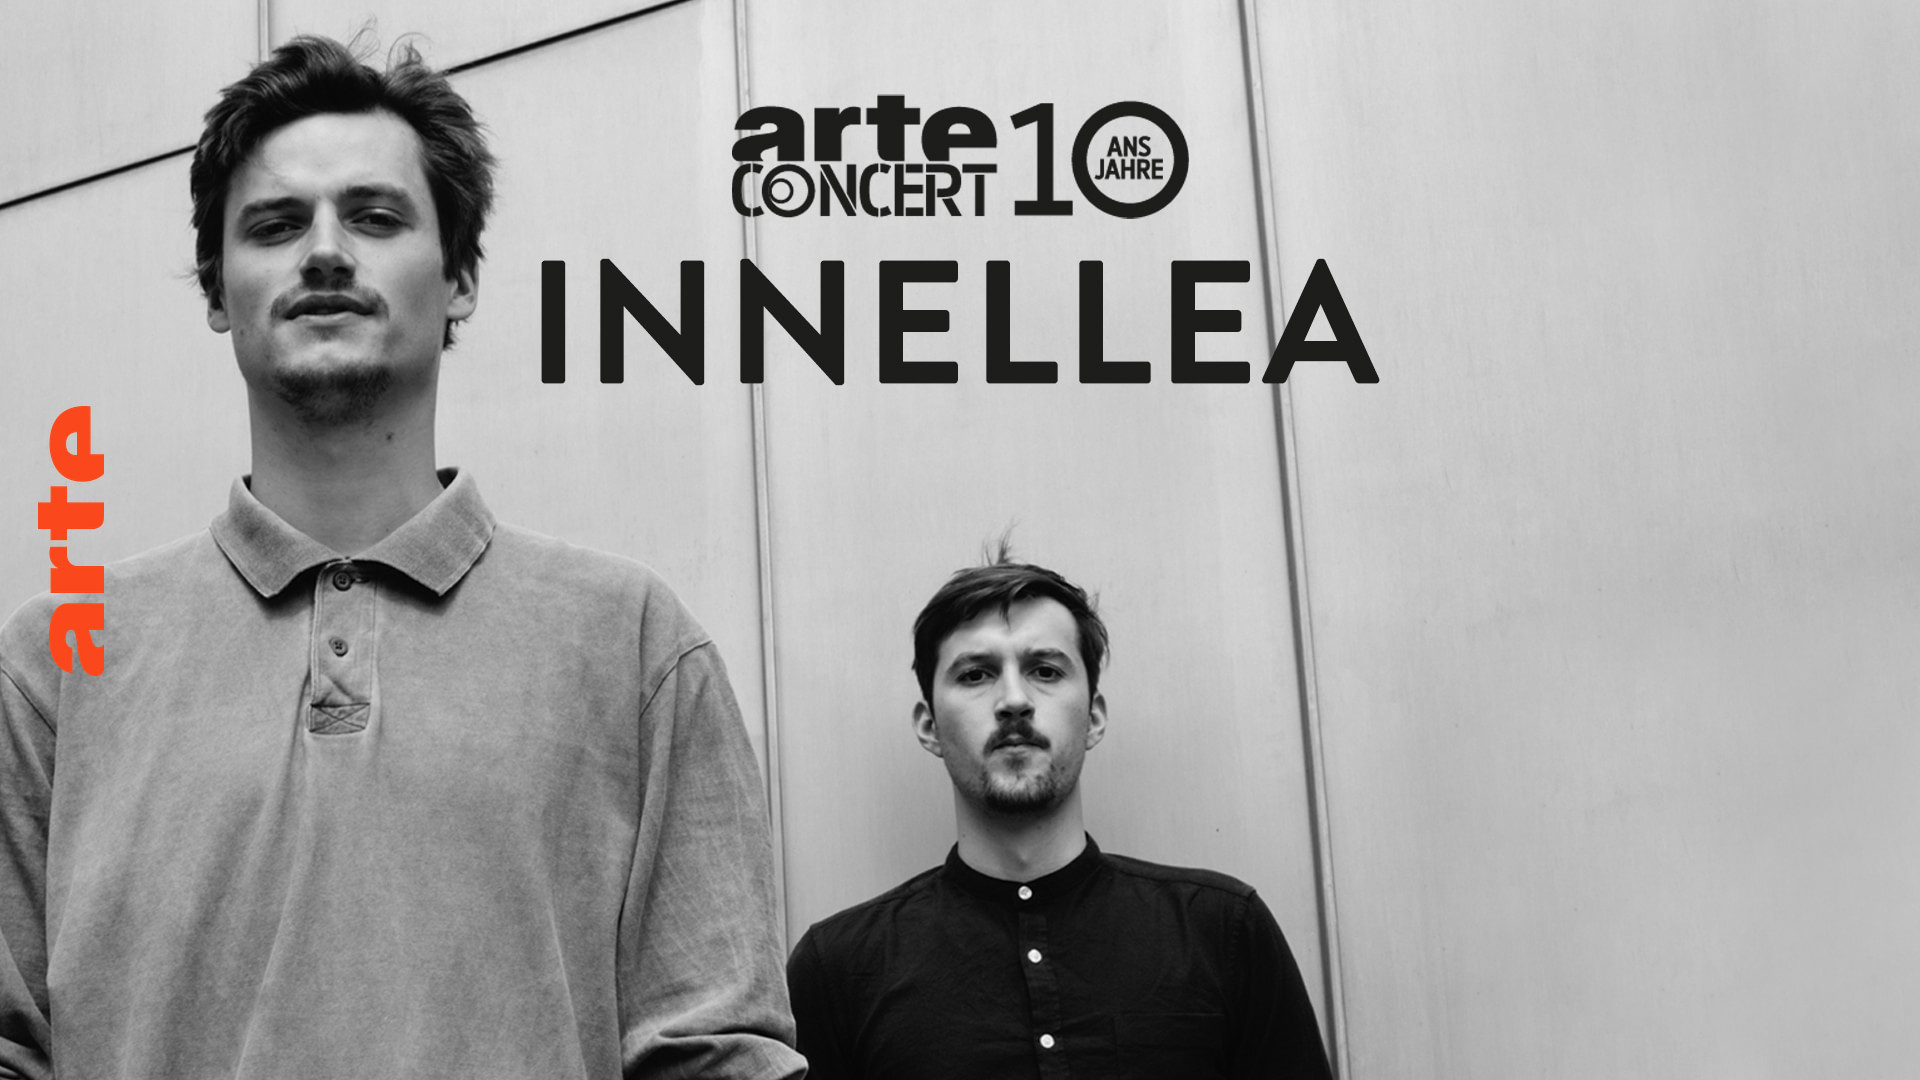 Innellea | Paris x Berlin - 10 Jahre ARTE Concert